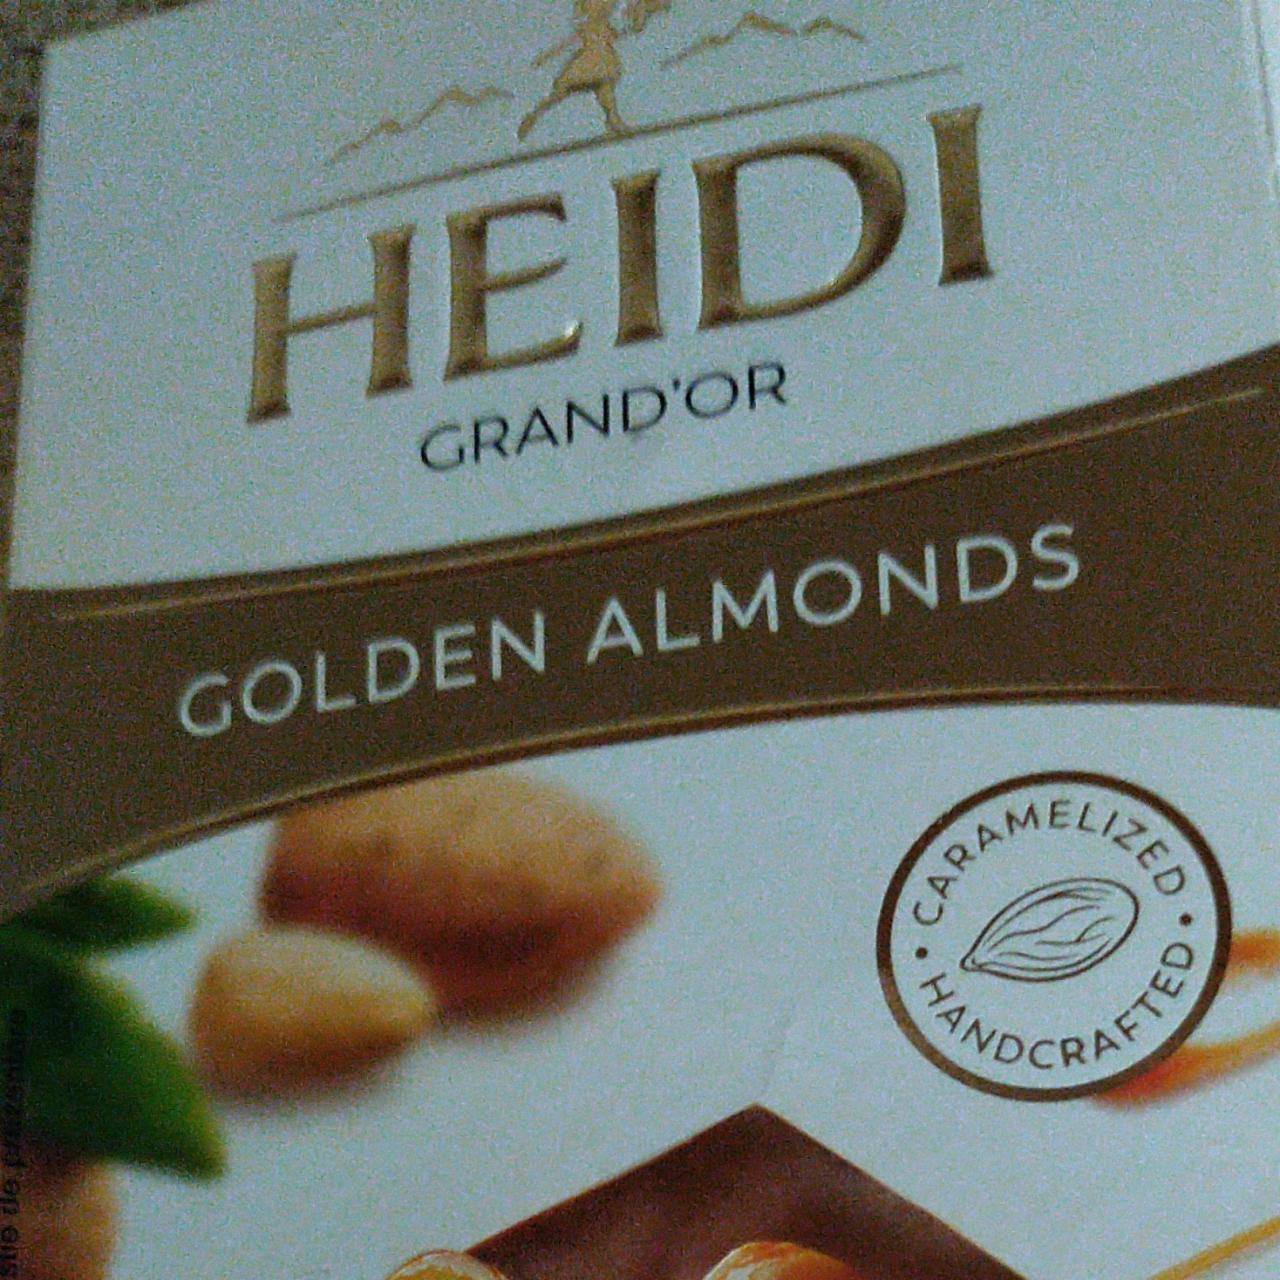 Zdjęcia - Golden Almonds Heidi Grand'or